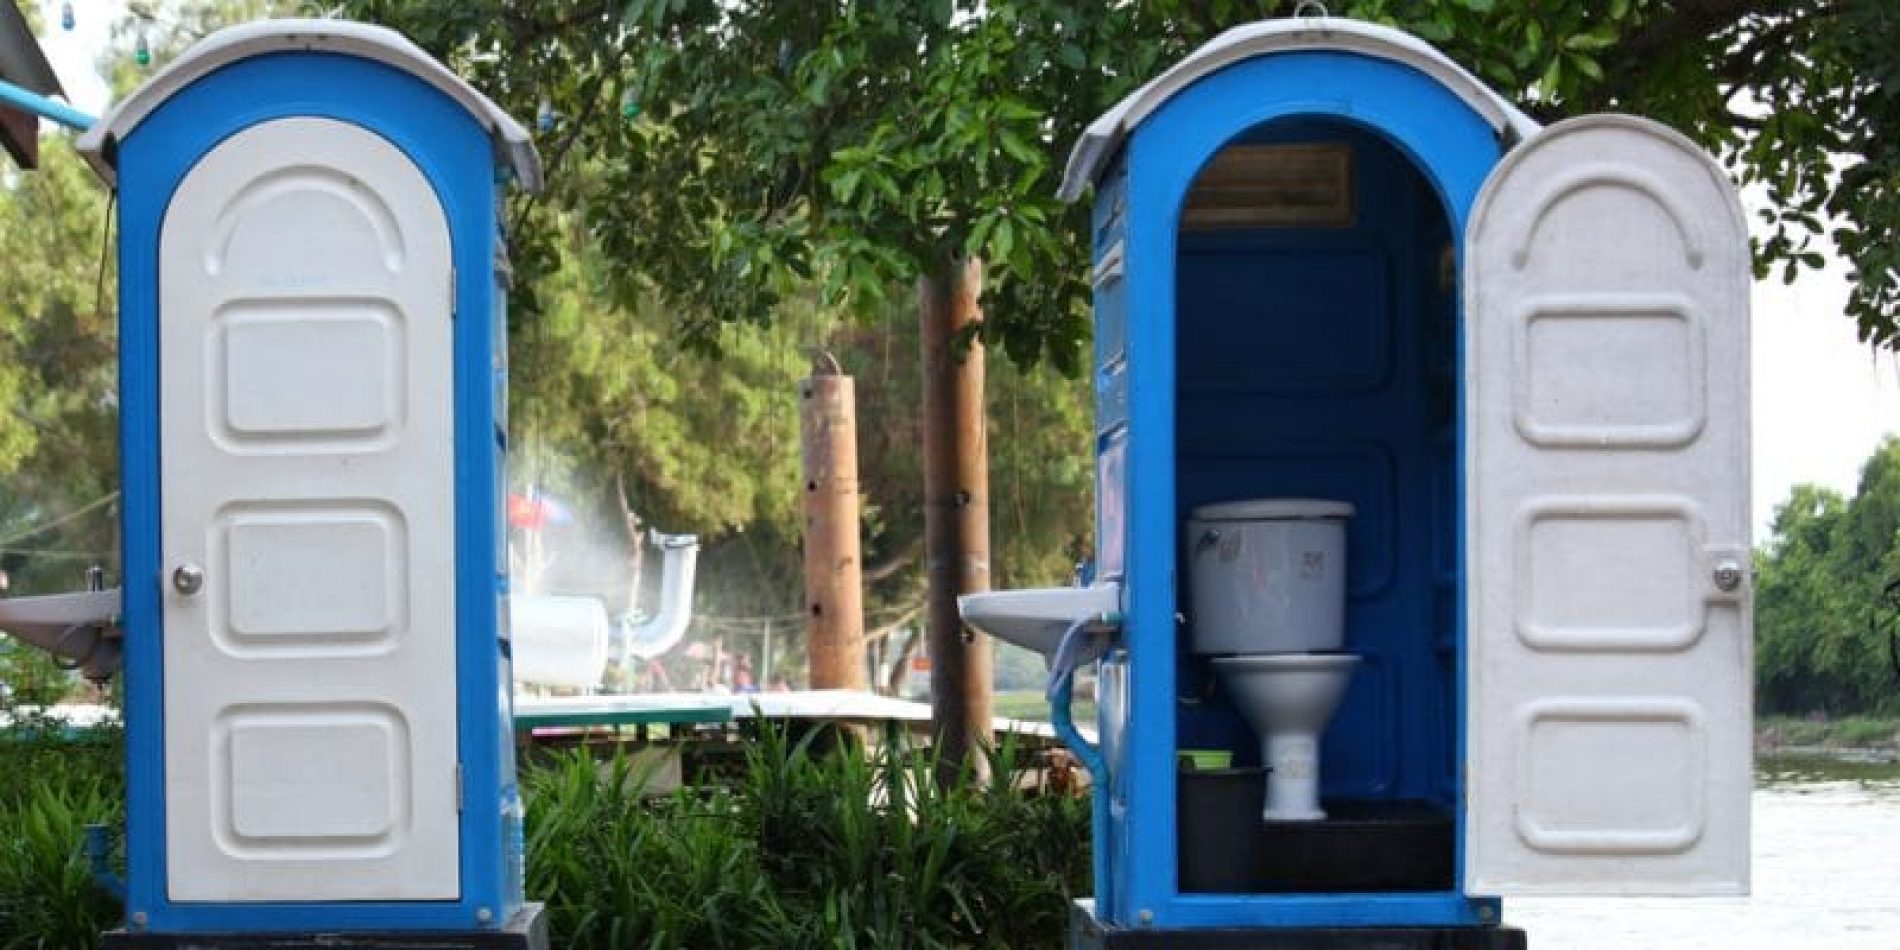 Kenya – assainissement urbain : Bientôt des toilettes intelligentes à Nairobi